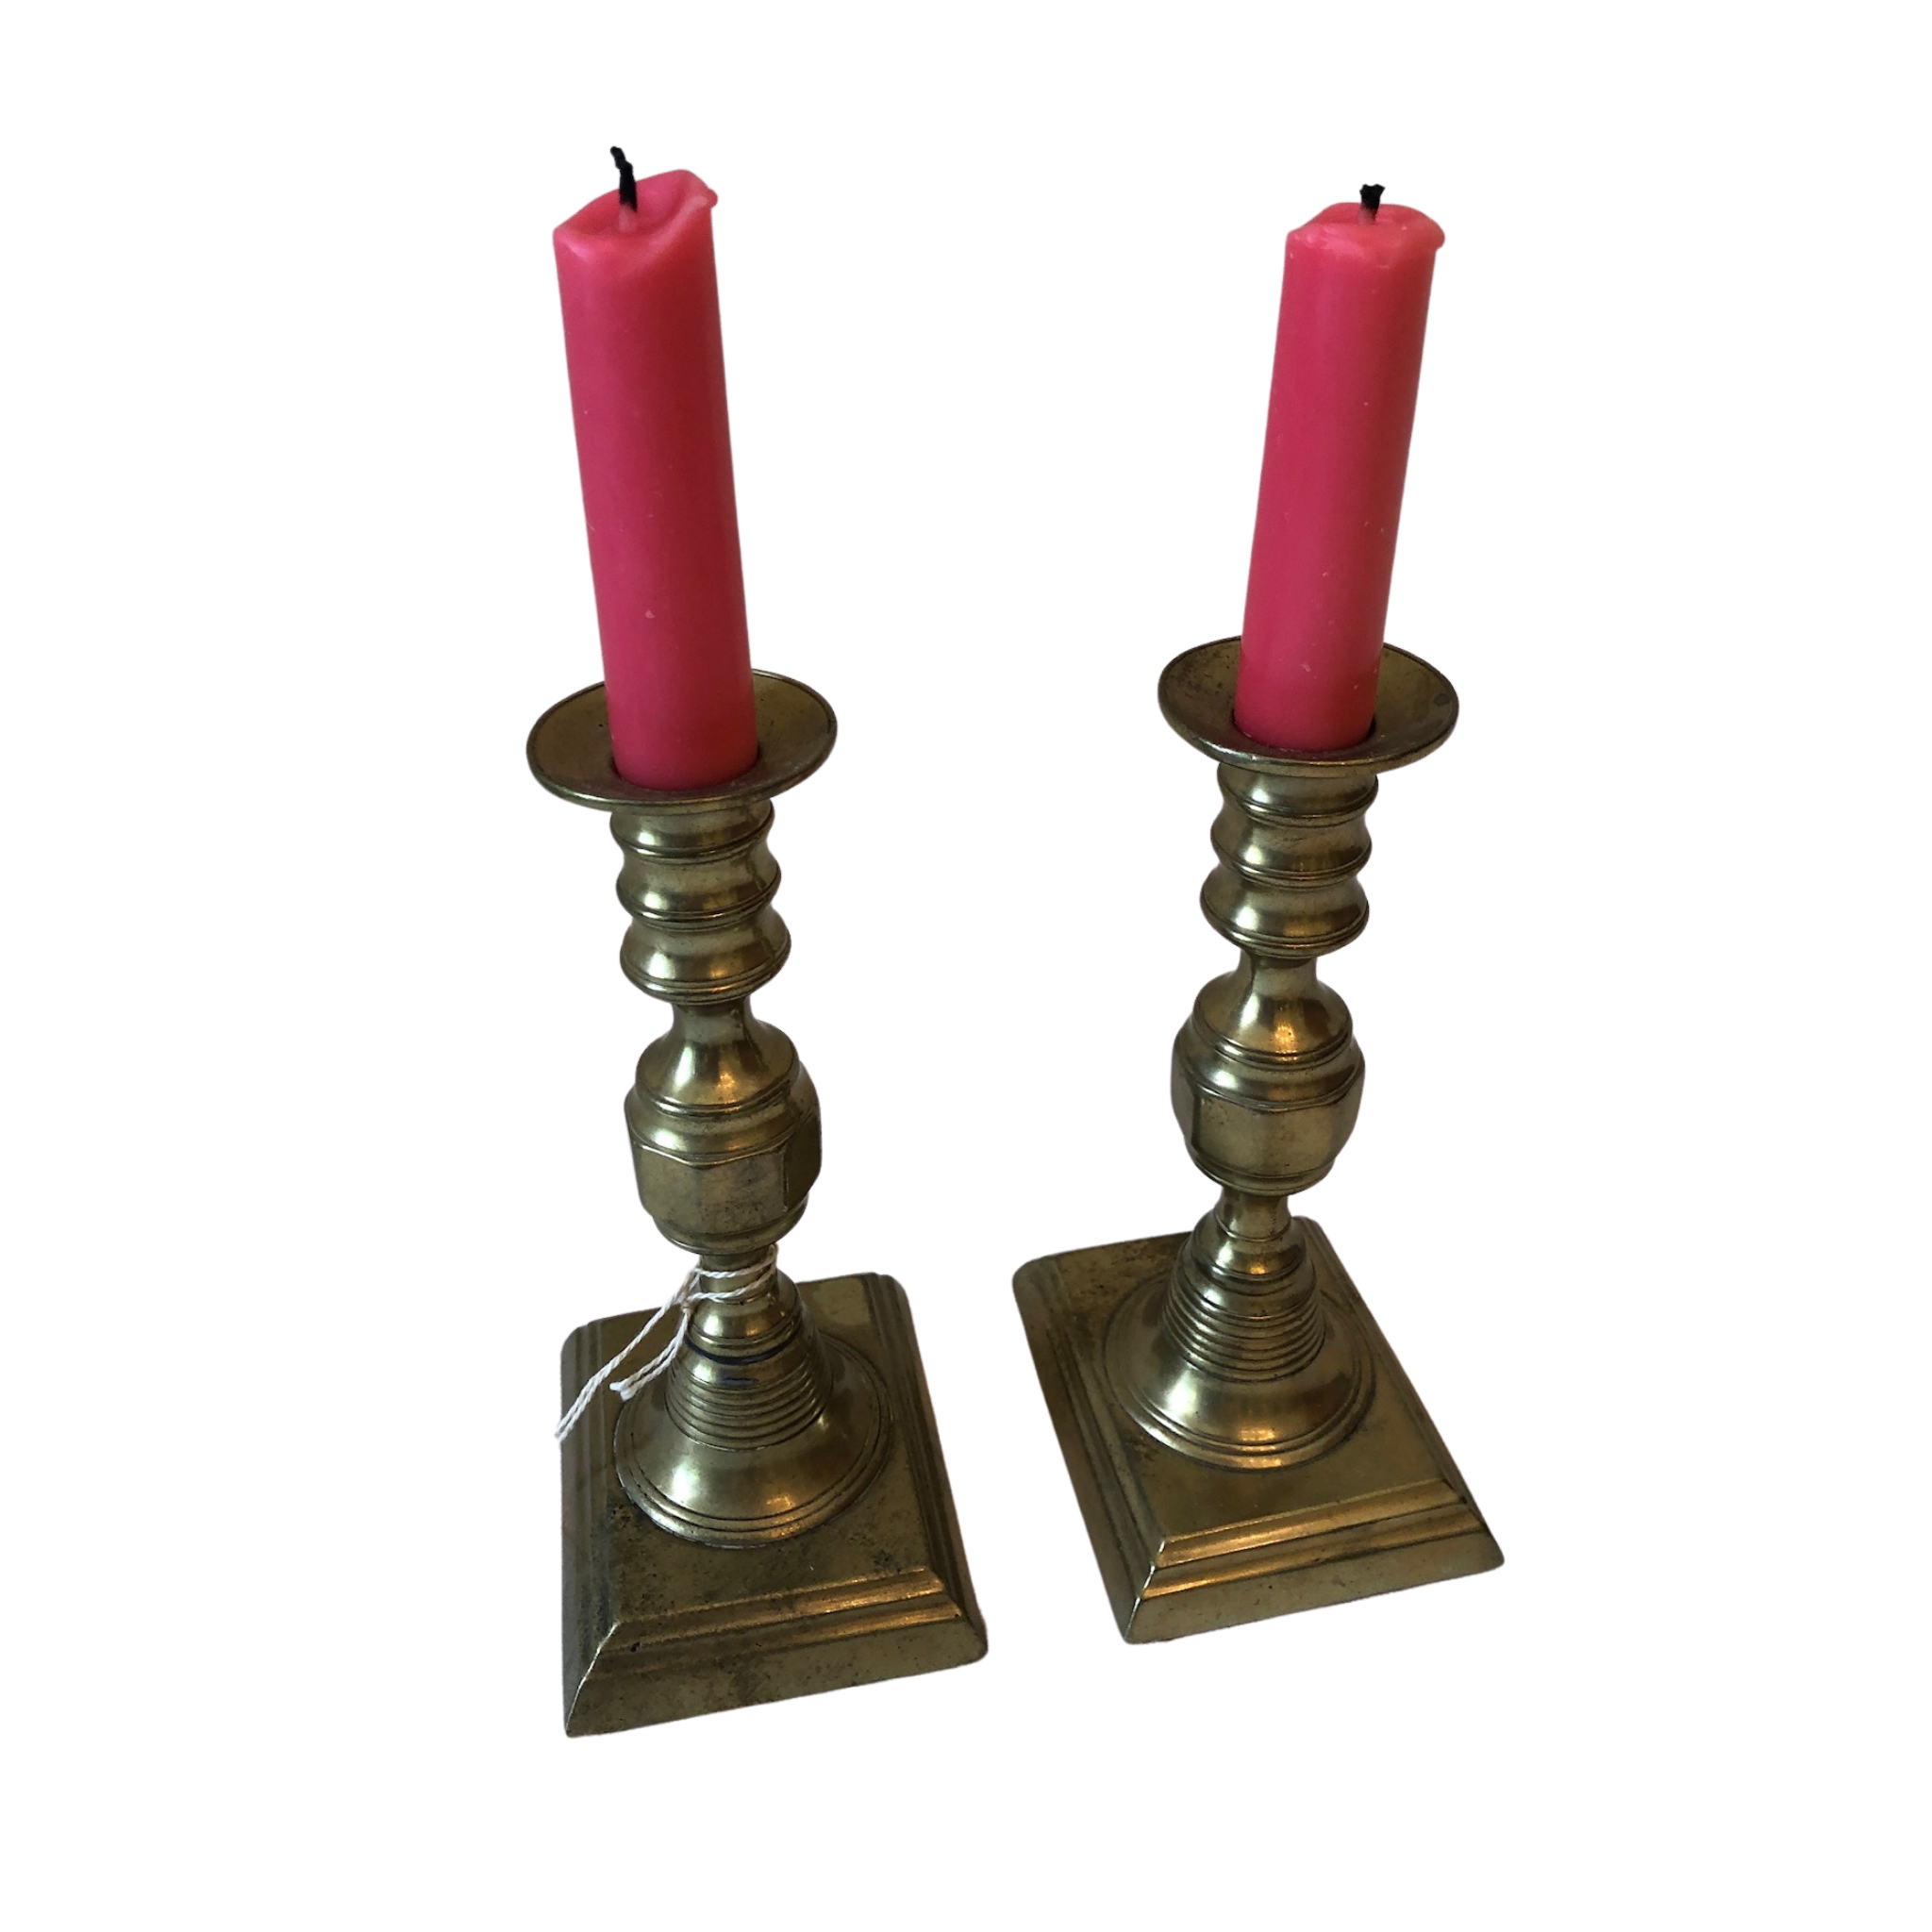 Pair of English Brass Candlesticks with Rectangular Base